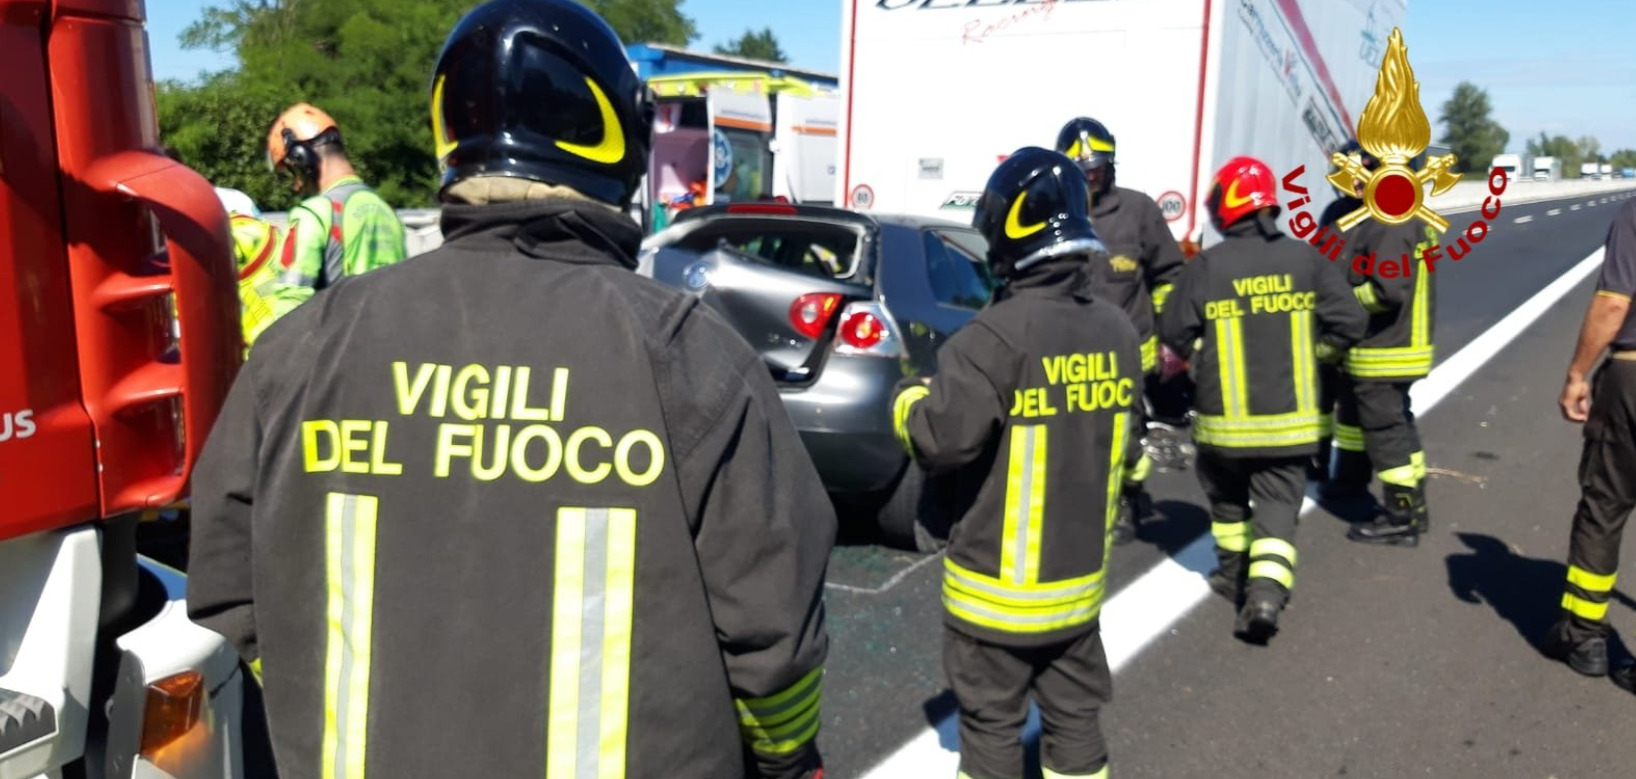 Screenshot_2019-09-13 VigilFuoco Veneto on Twitter